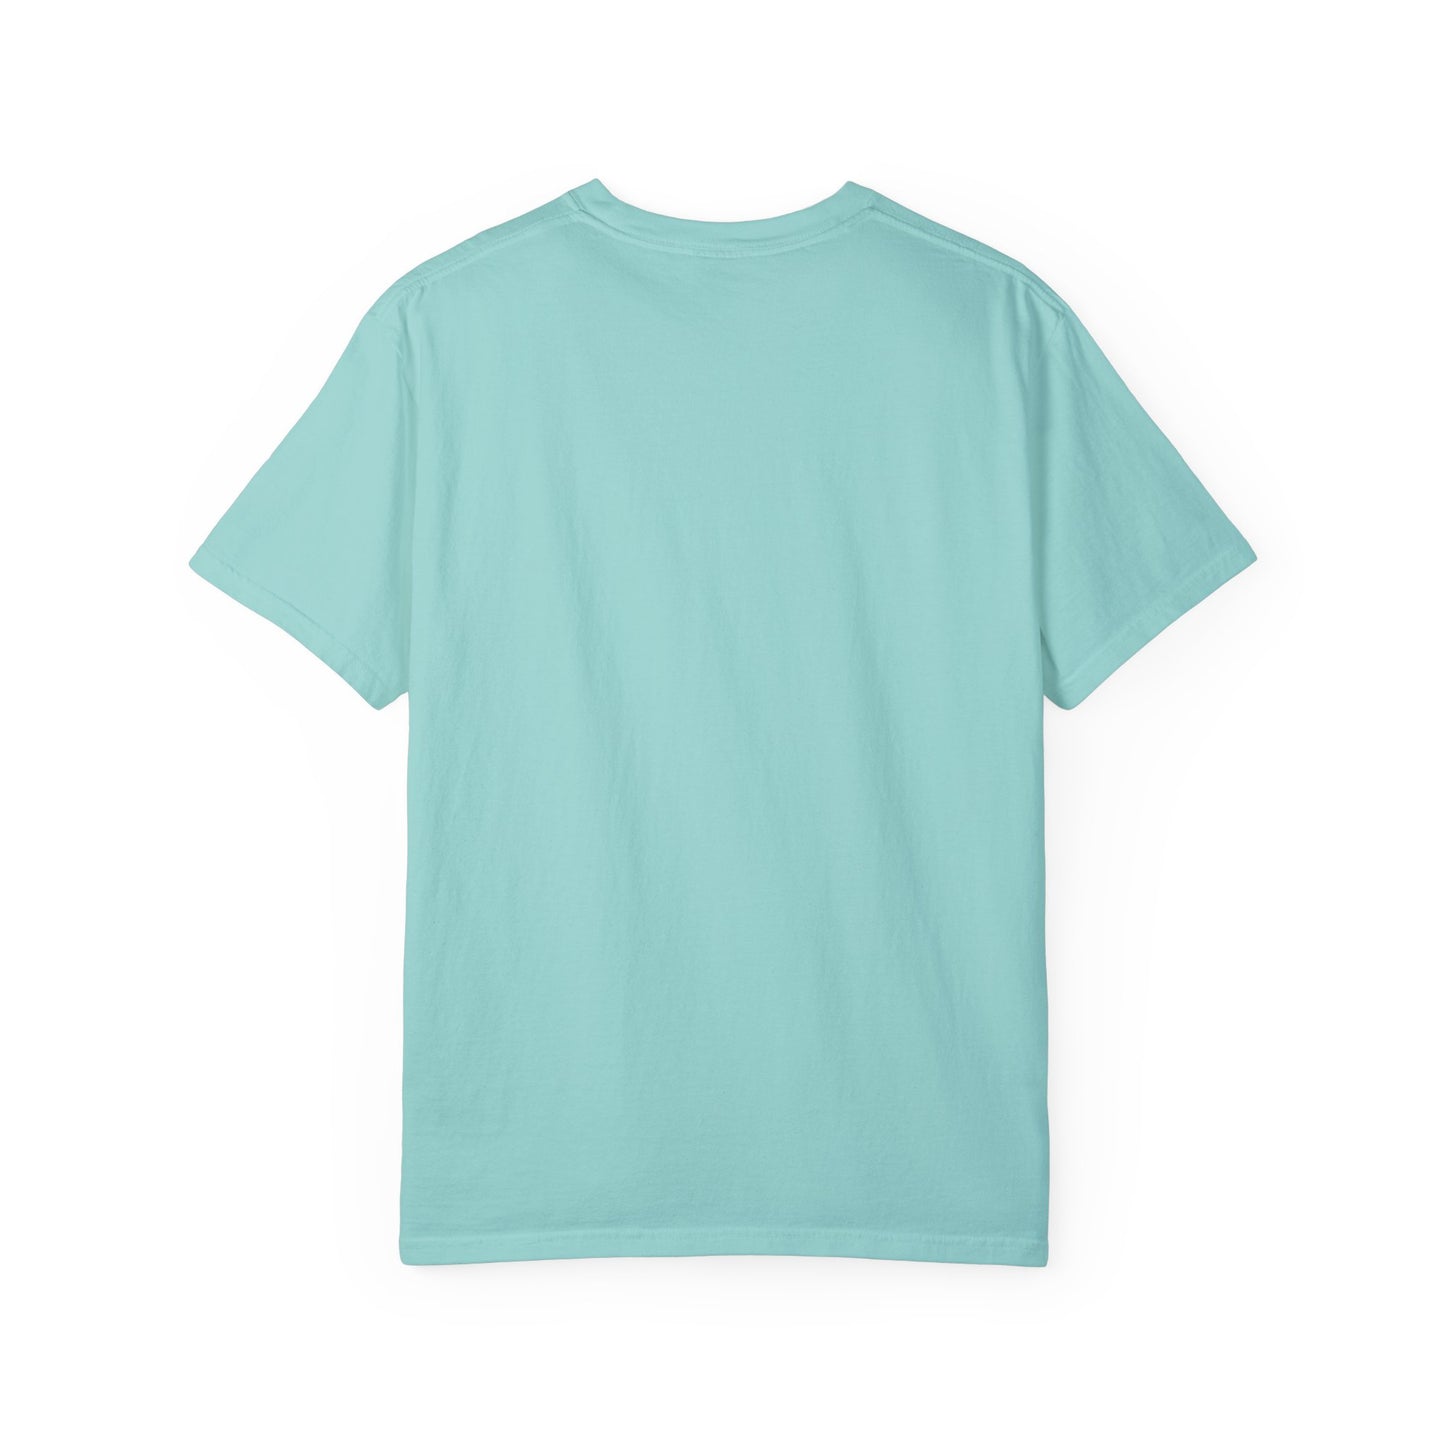 'Tangent' Unisex Garment-Dyed T-shirt